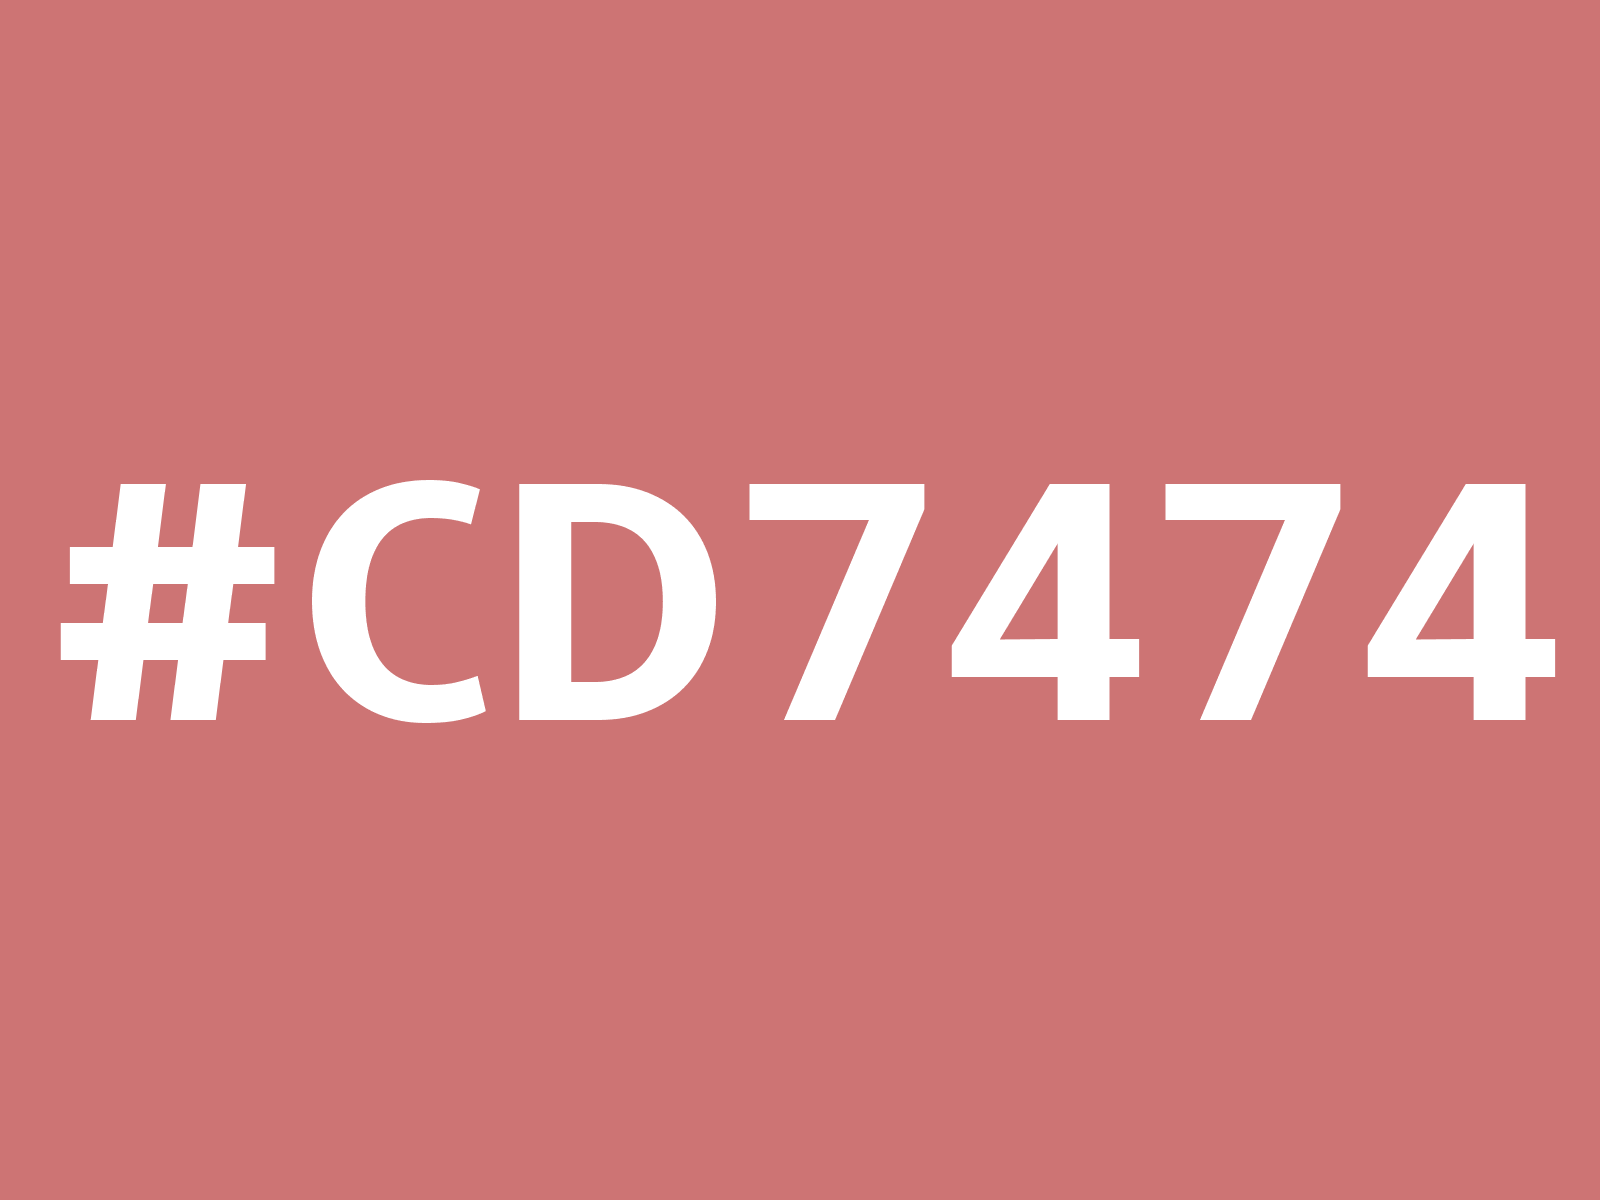 cd7474